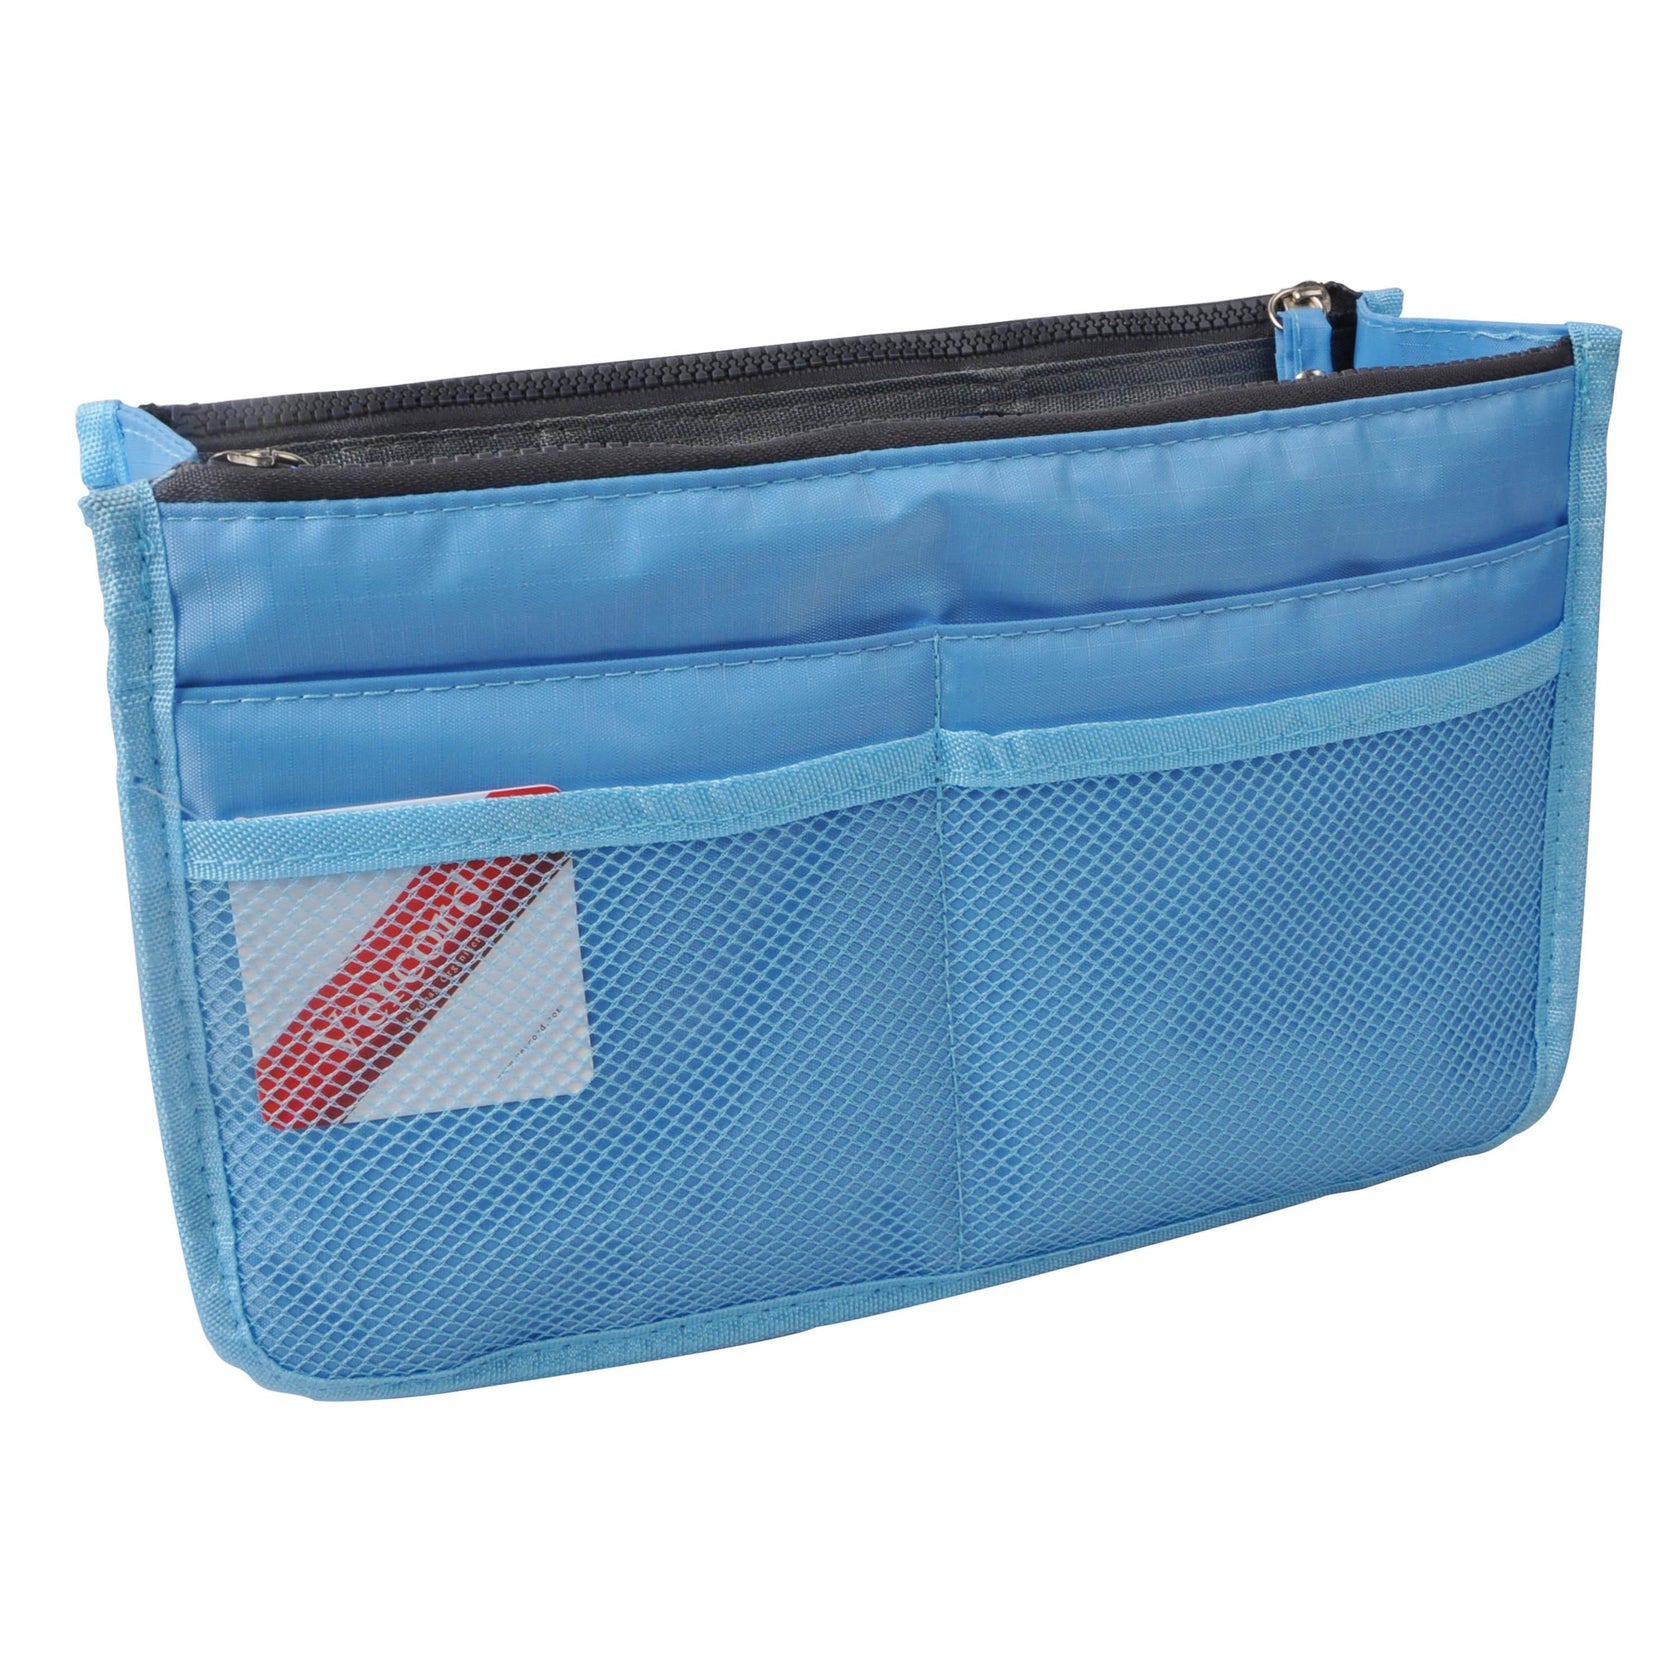 Upgraded Purse Handbag Organizer Insert Liner Bag in Bag Pure Color ...